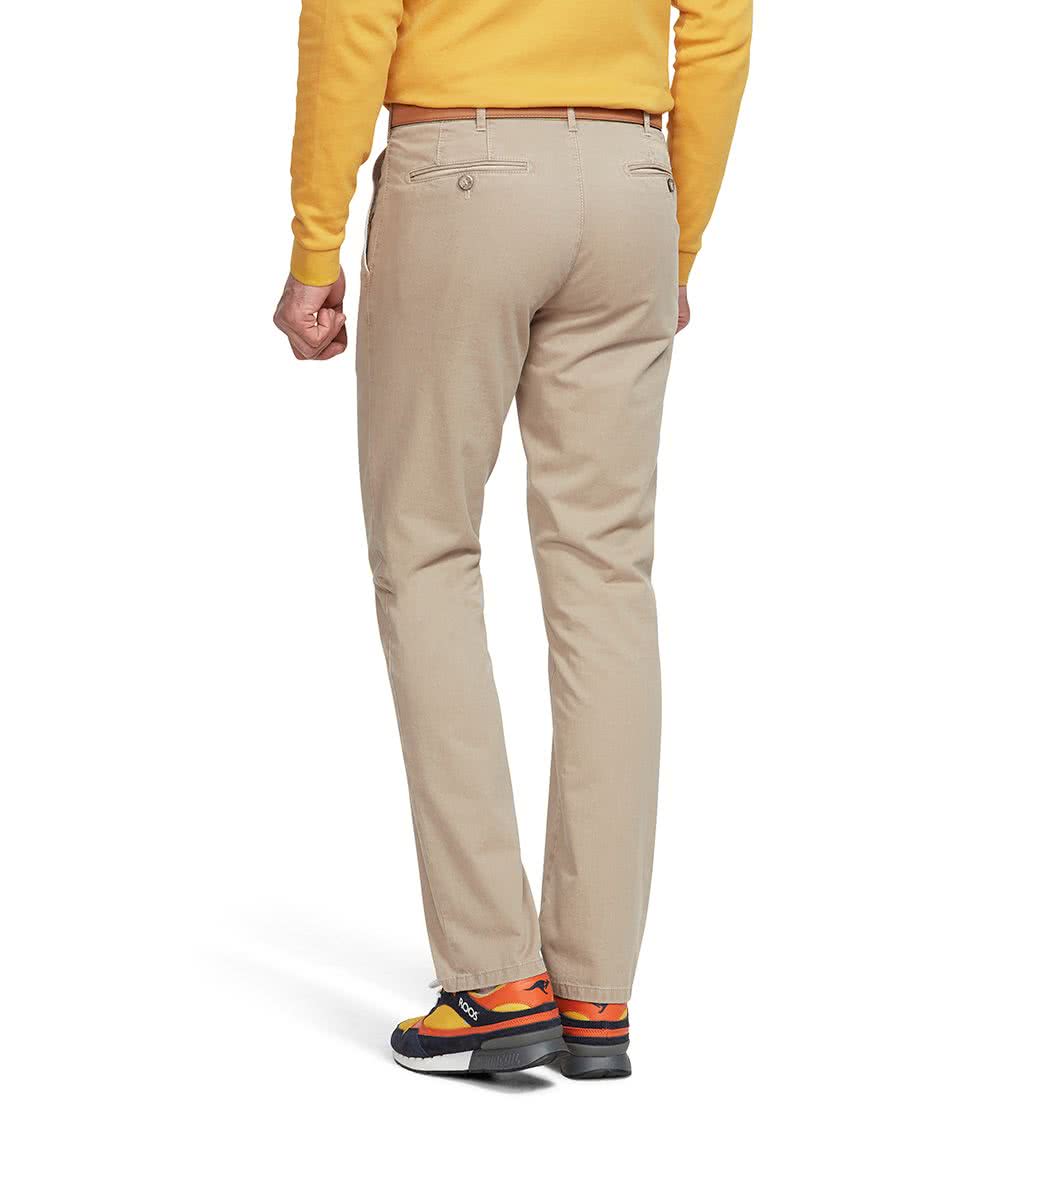 50% OFF - MEYER Trousers - New York Lightweight Cotton Twill Chinos - Beige - Size: 46 REG